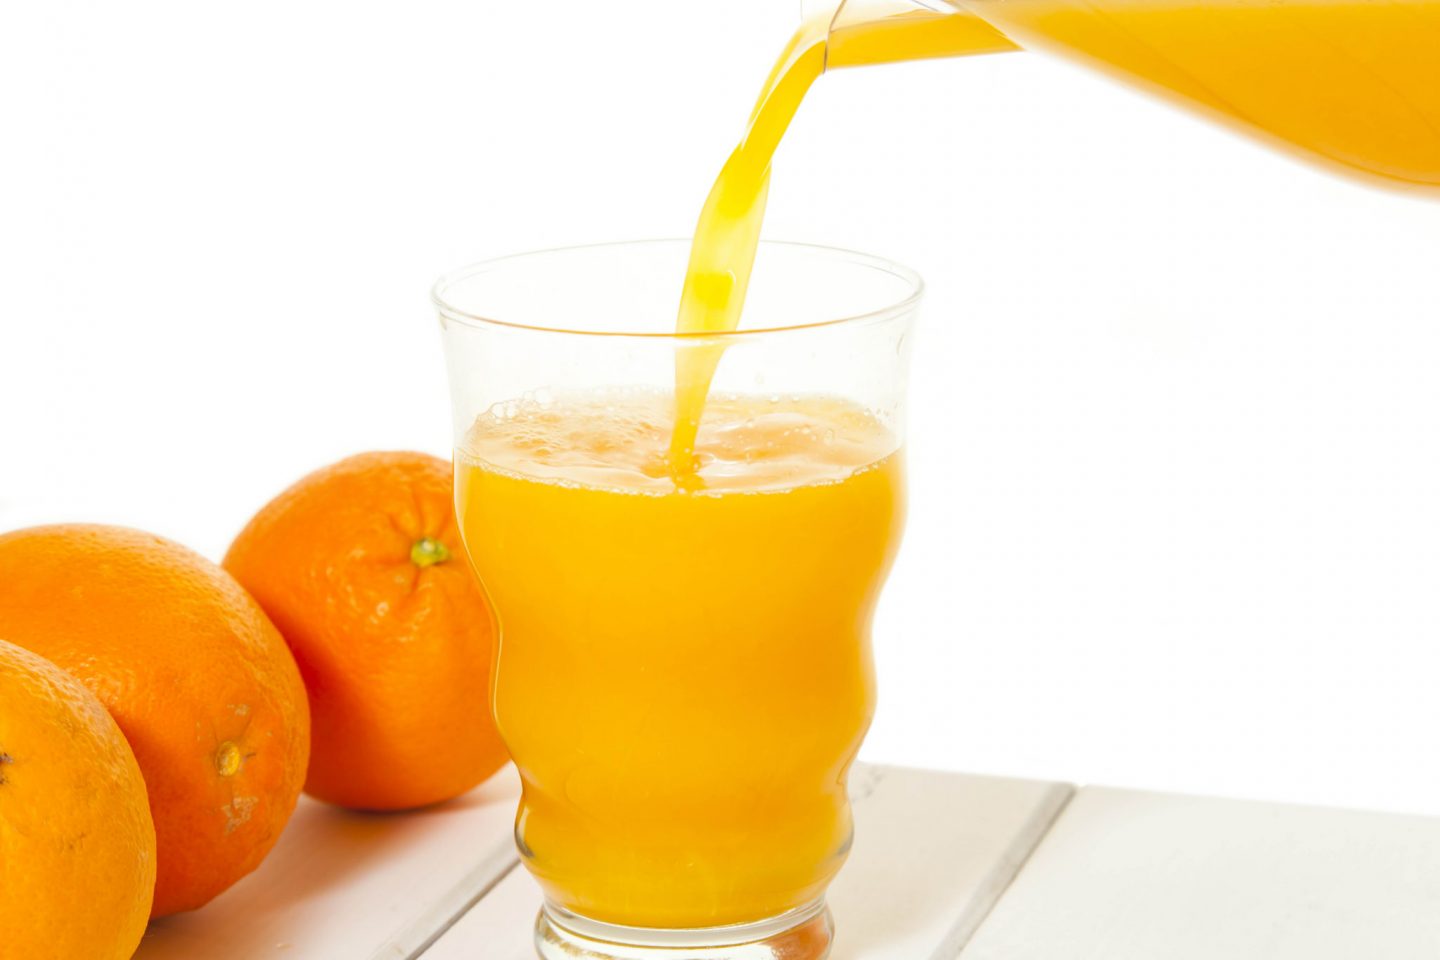 jugo de naranja pierde propiedades